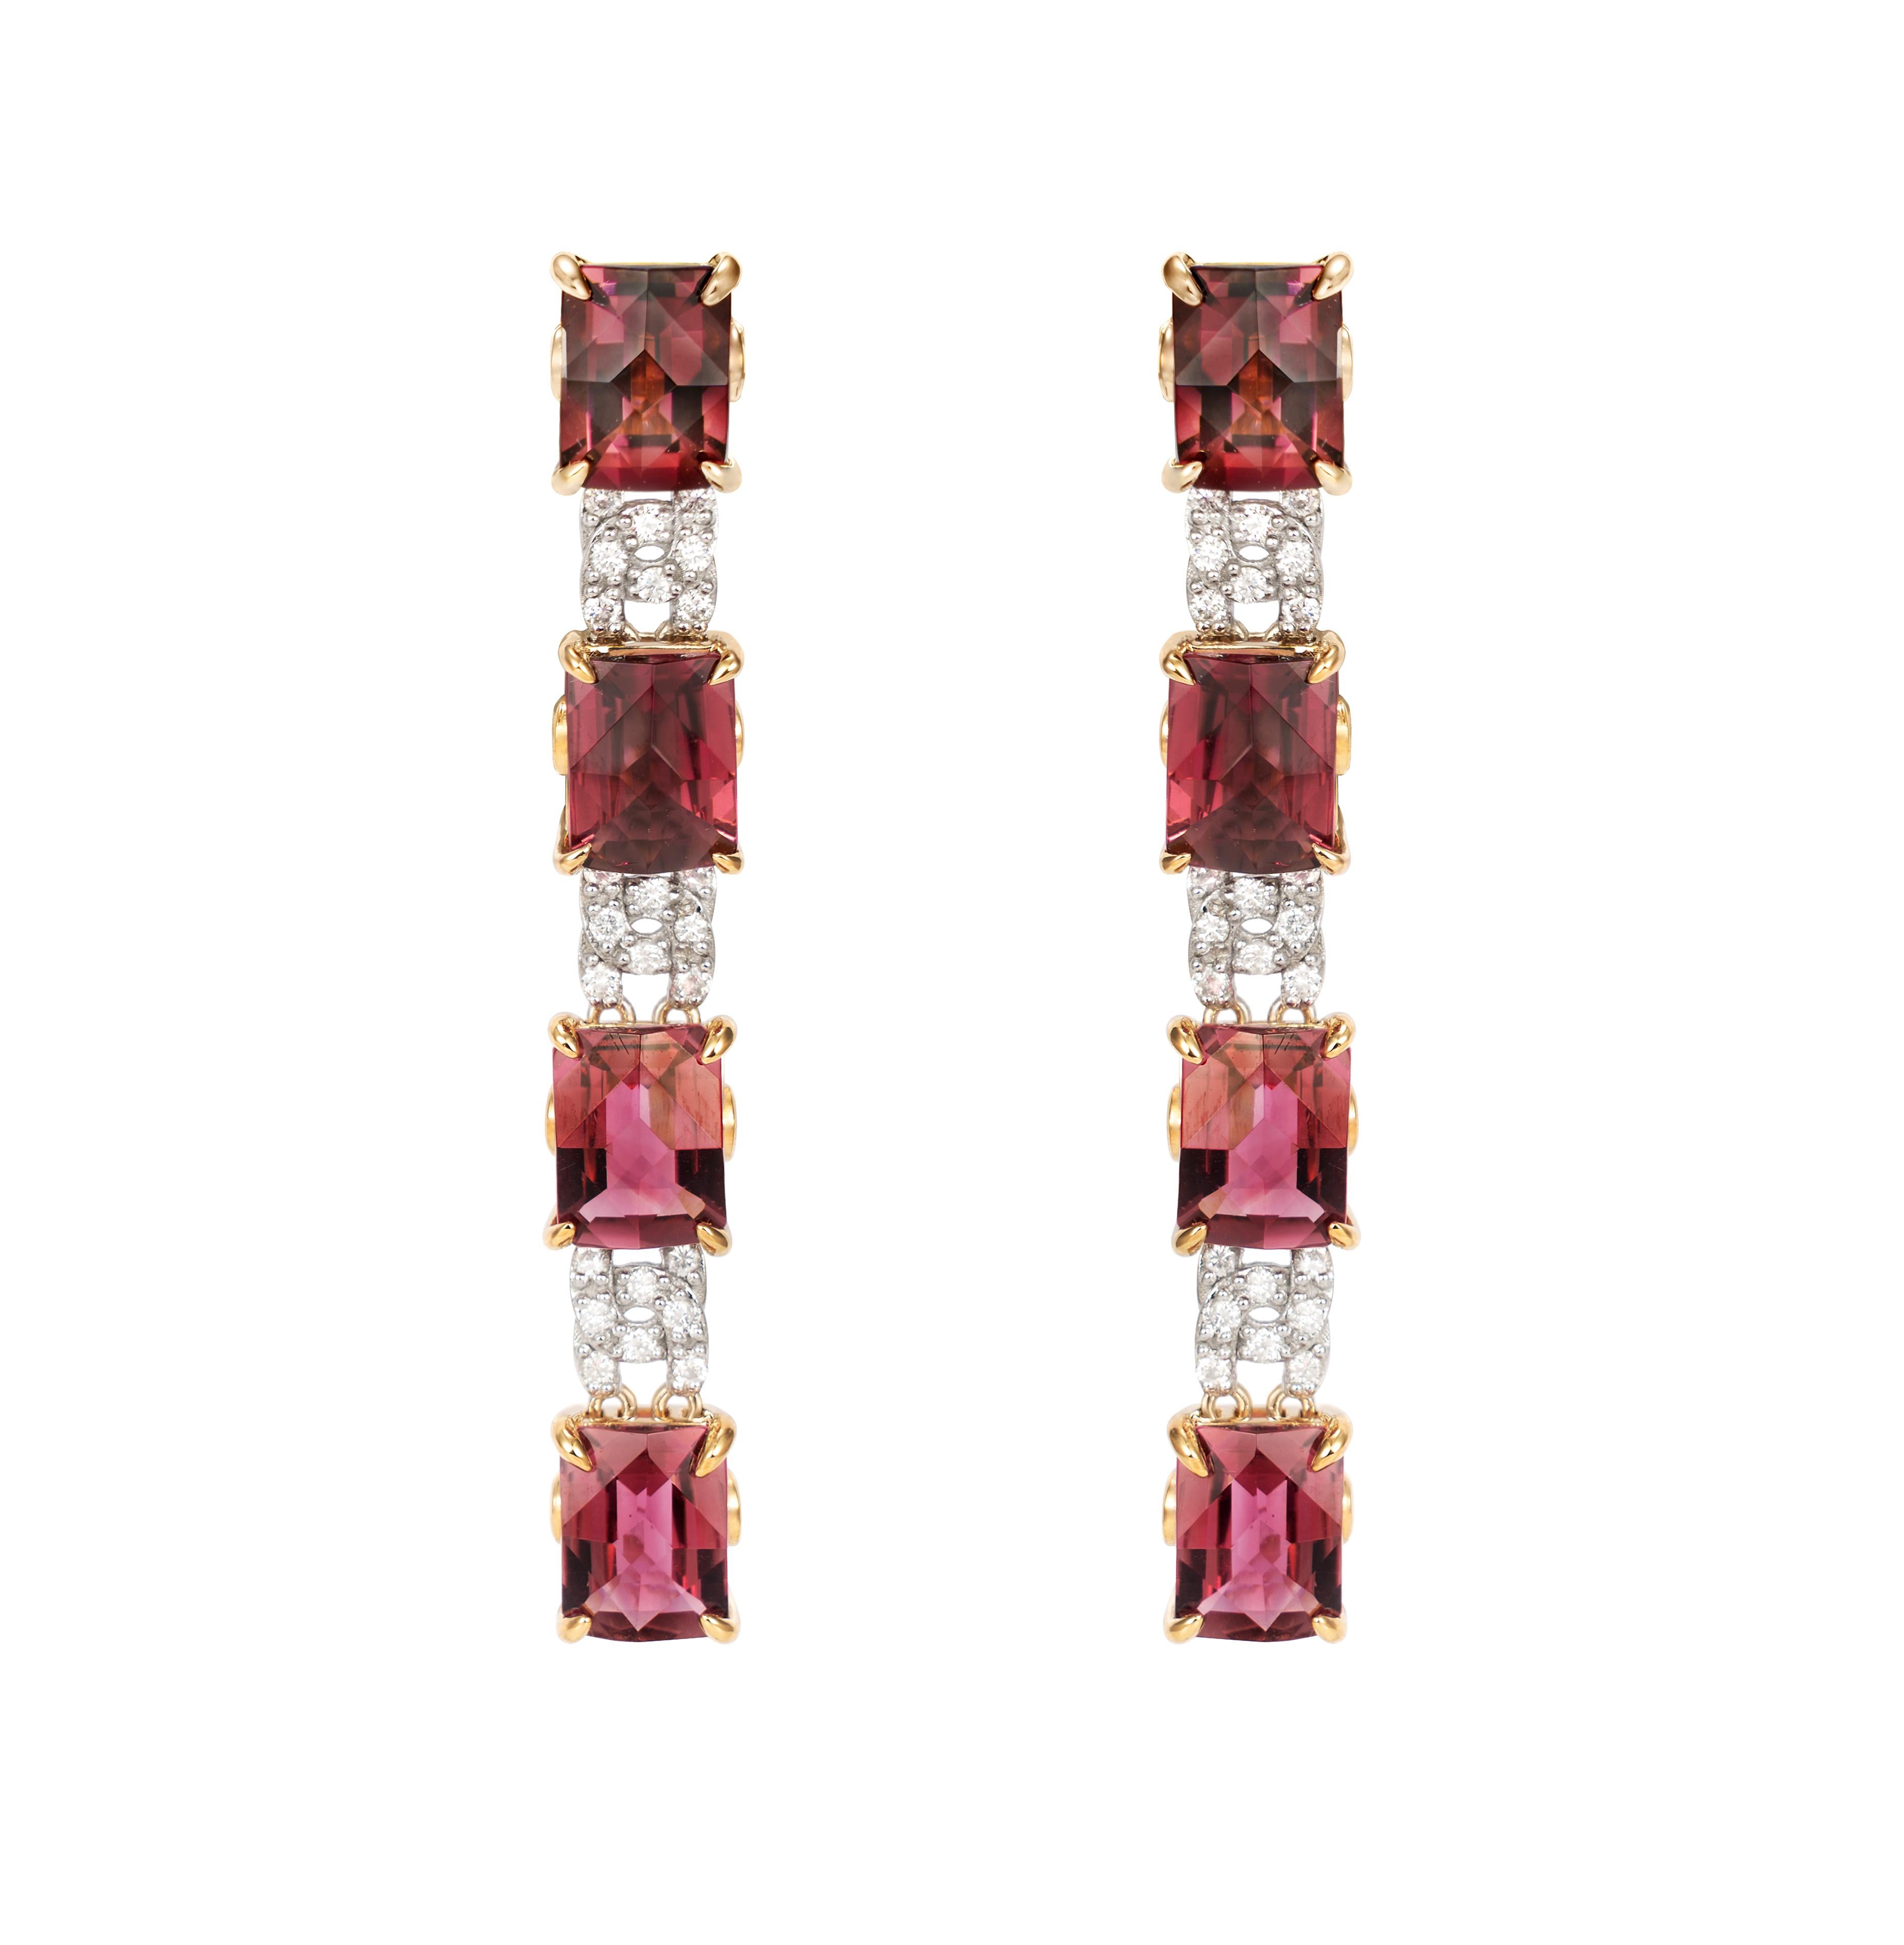 Cushion Cut Fancy Cut Ombre Pink Tourmaline Earrings with Diamond in 18 Karat Gold For Sale